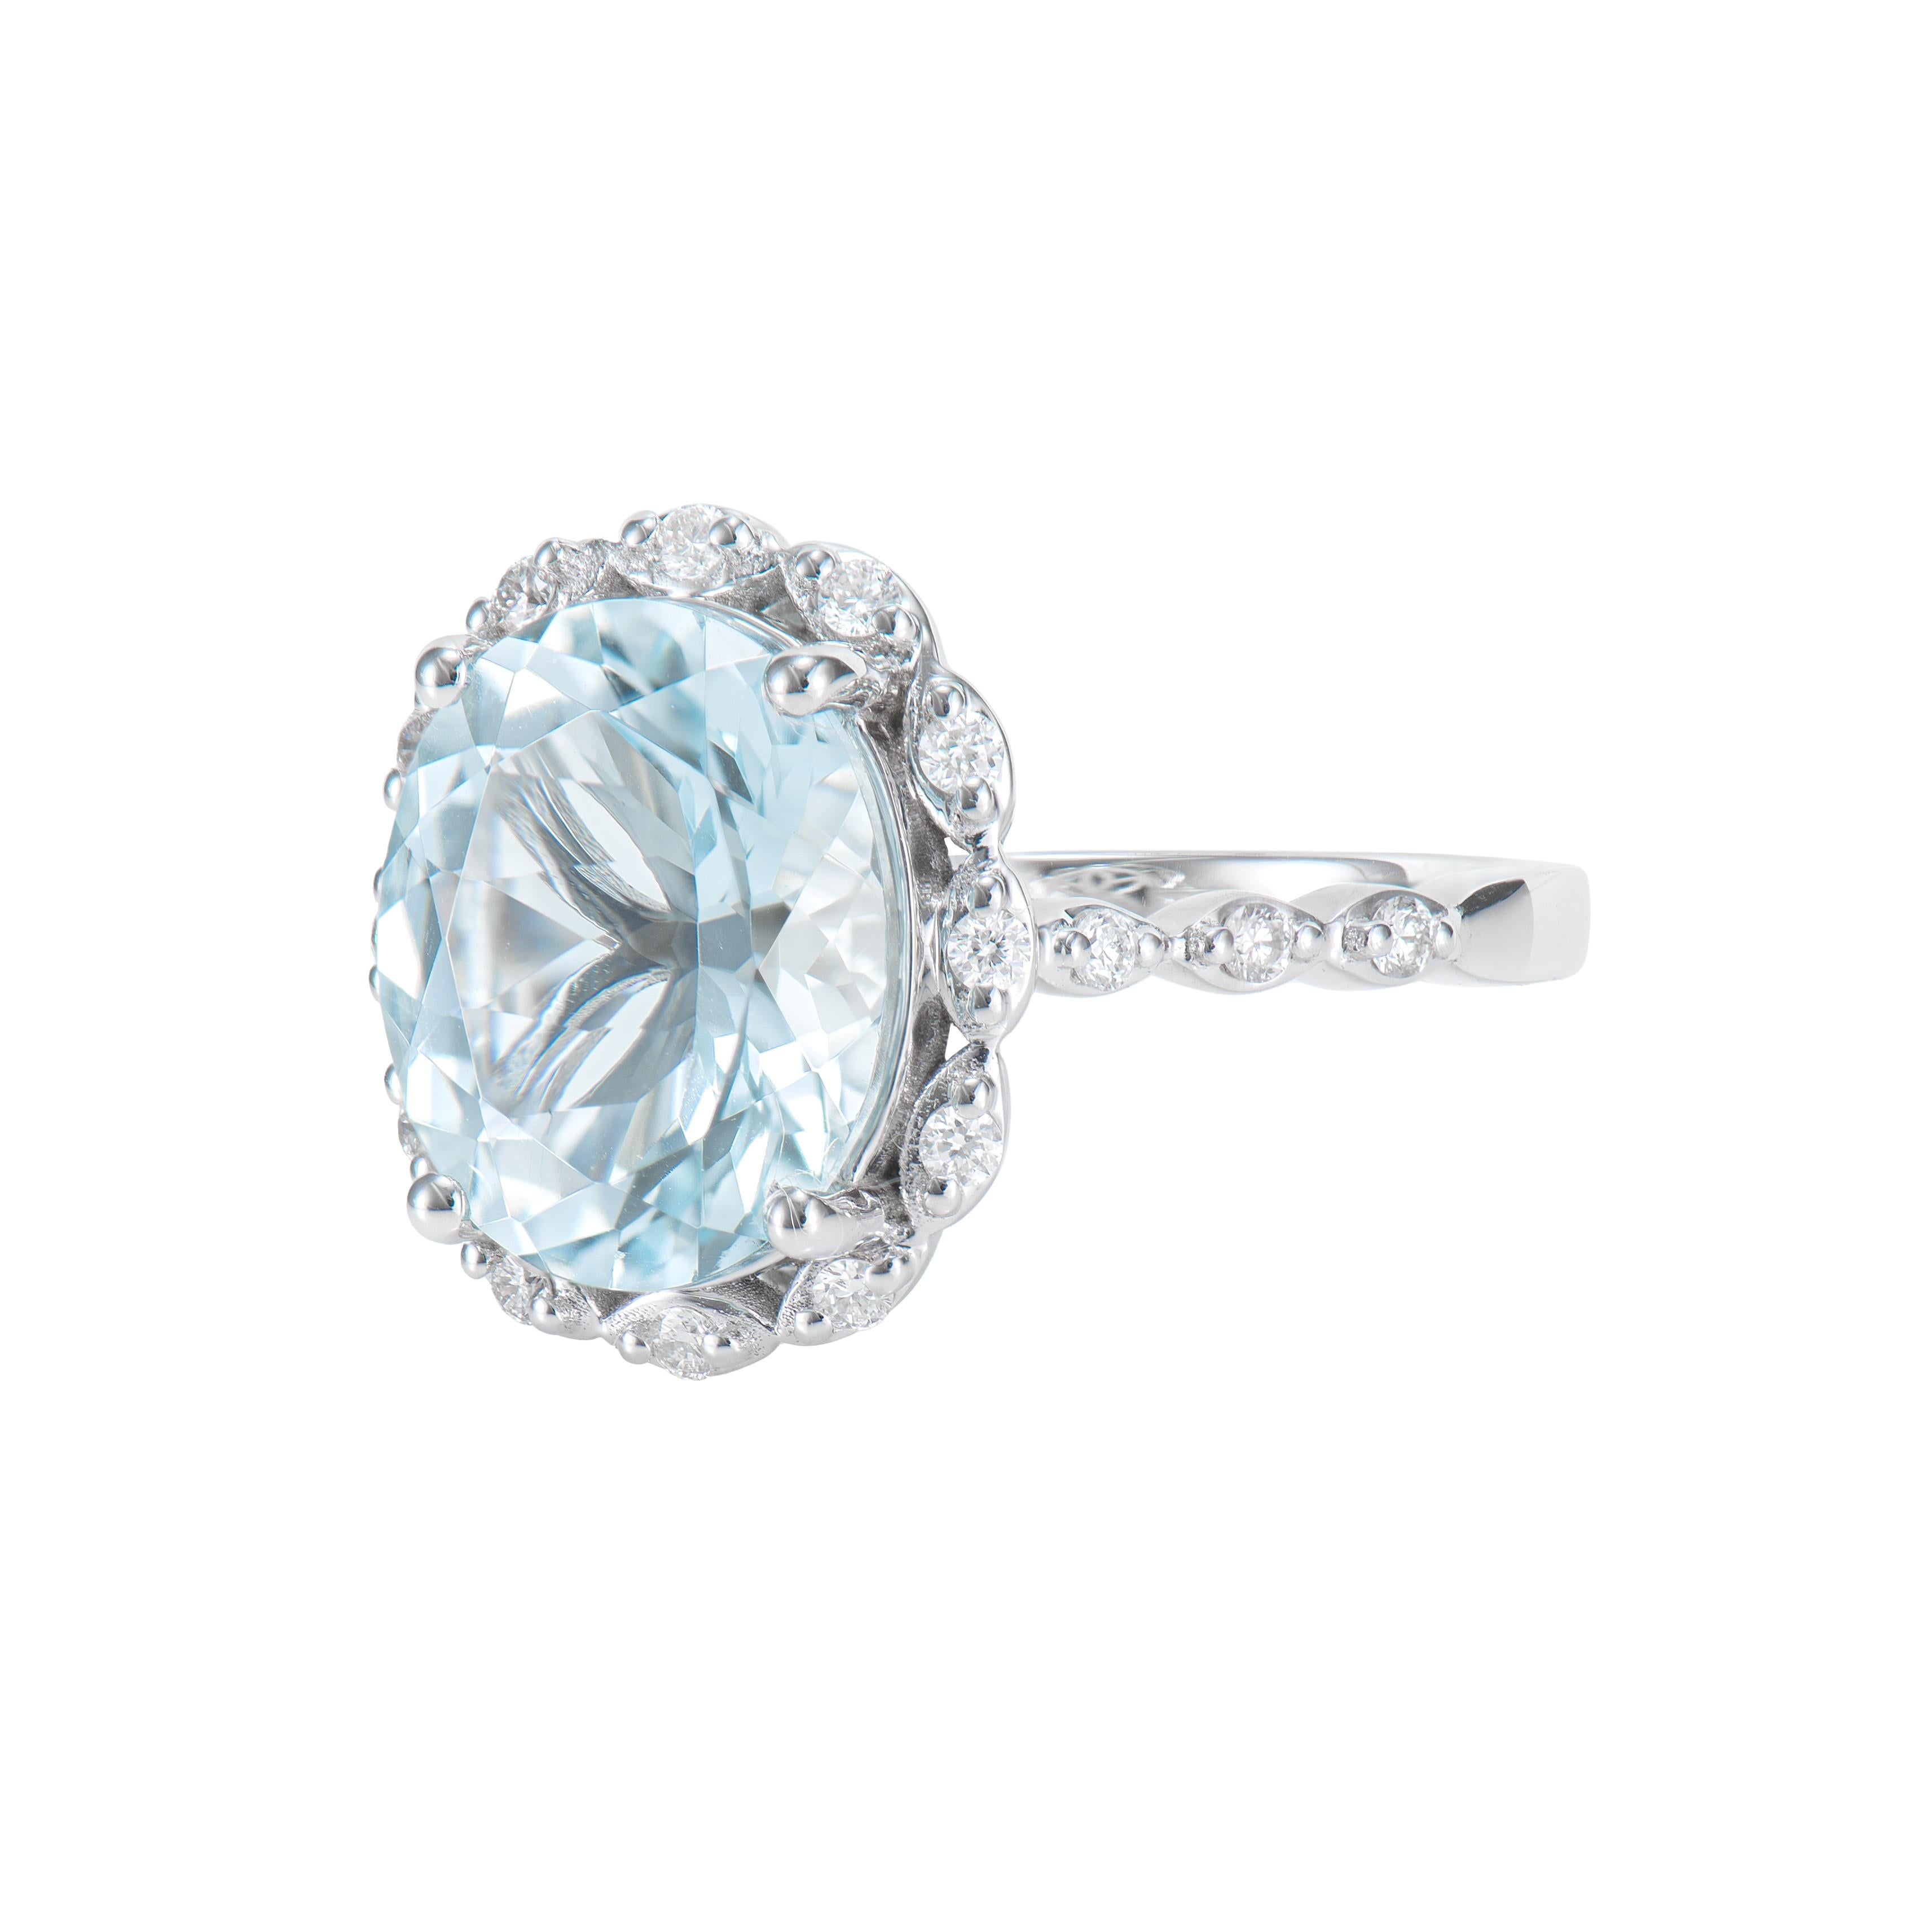 Oval Cut 4.20 Carat Aquamarine Elegant Ring in 18 Karat White Gold with White Diamond For Sale